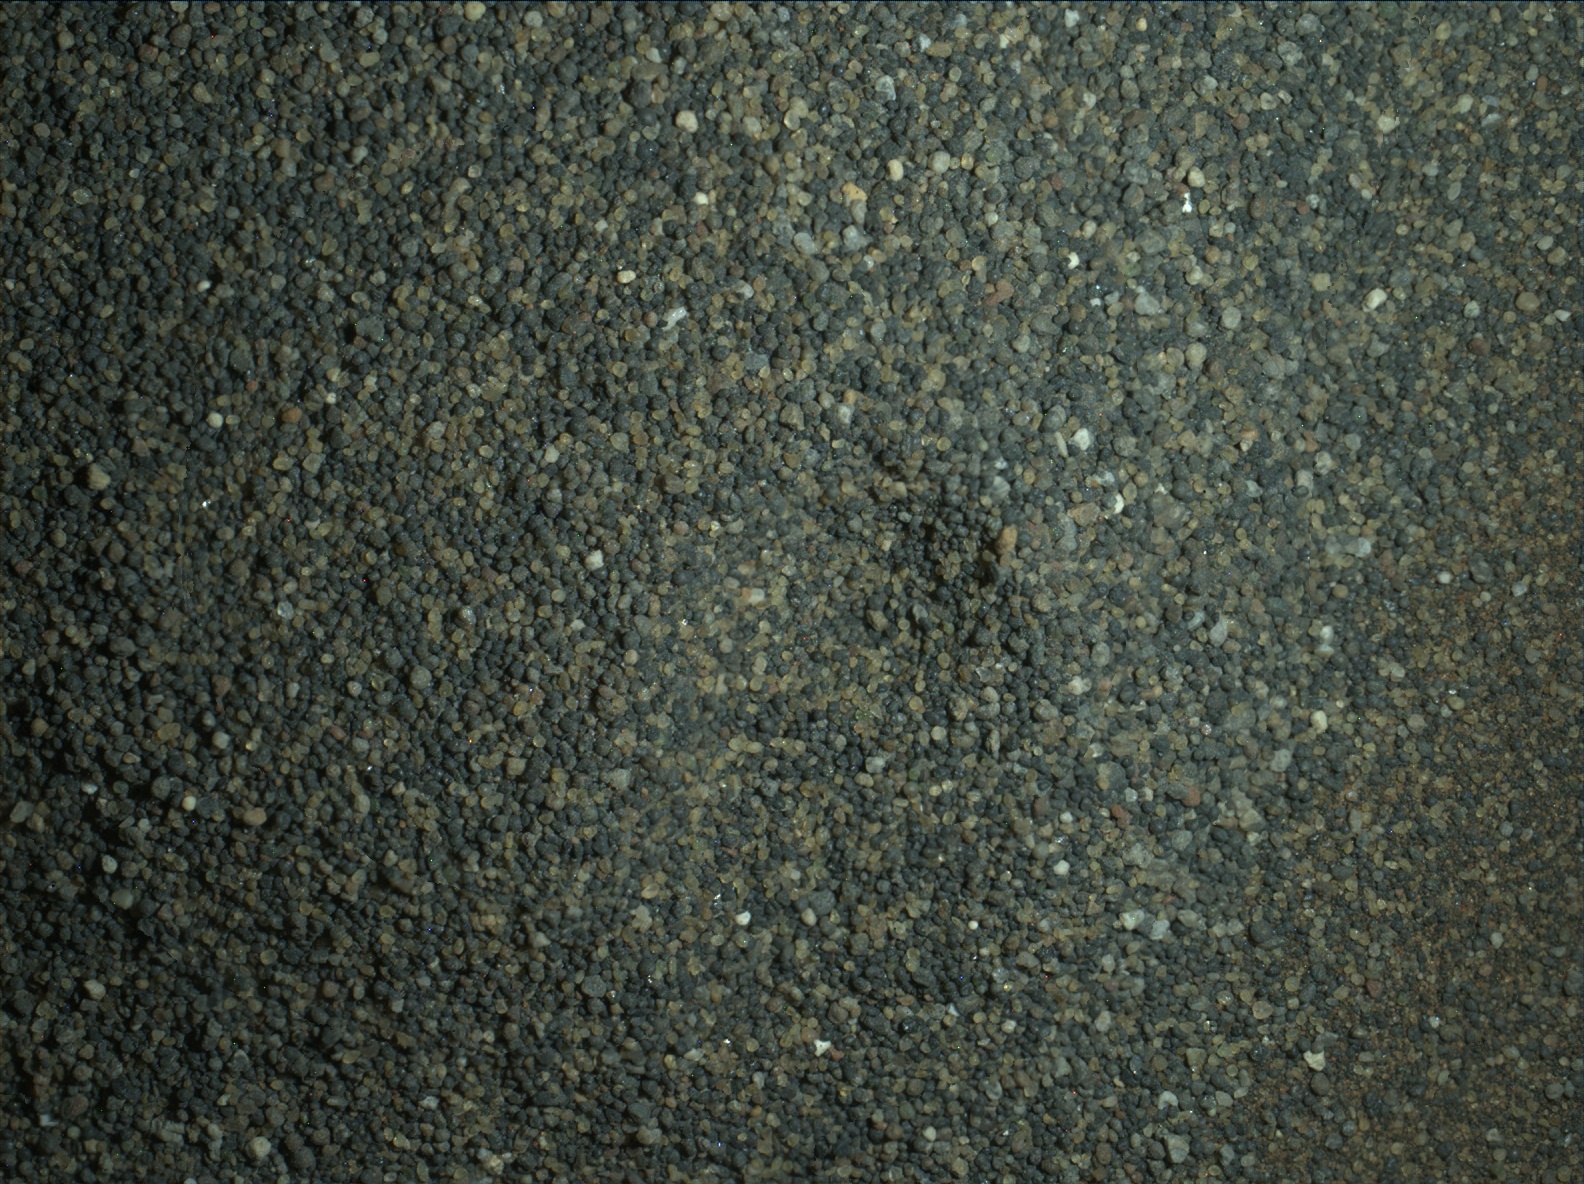 Night Close-up of Martian Sand Grains